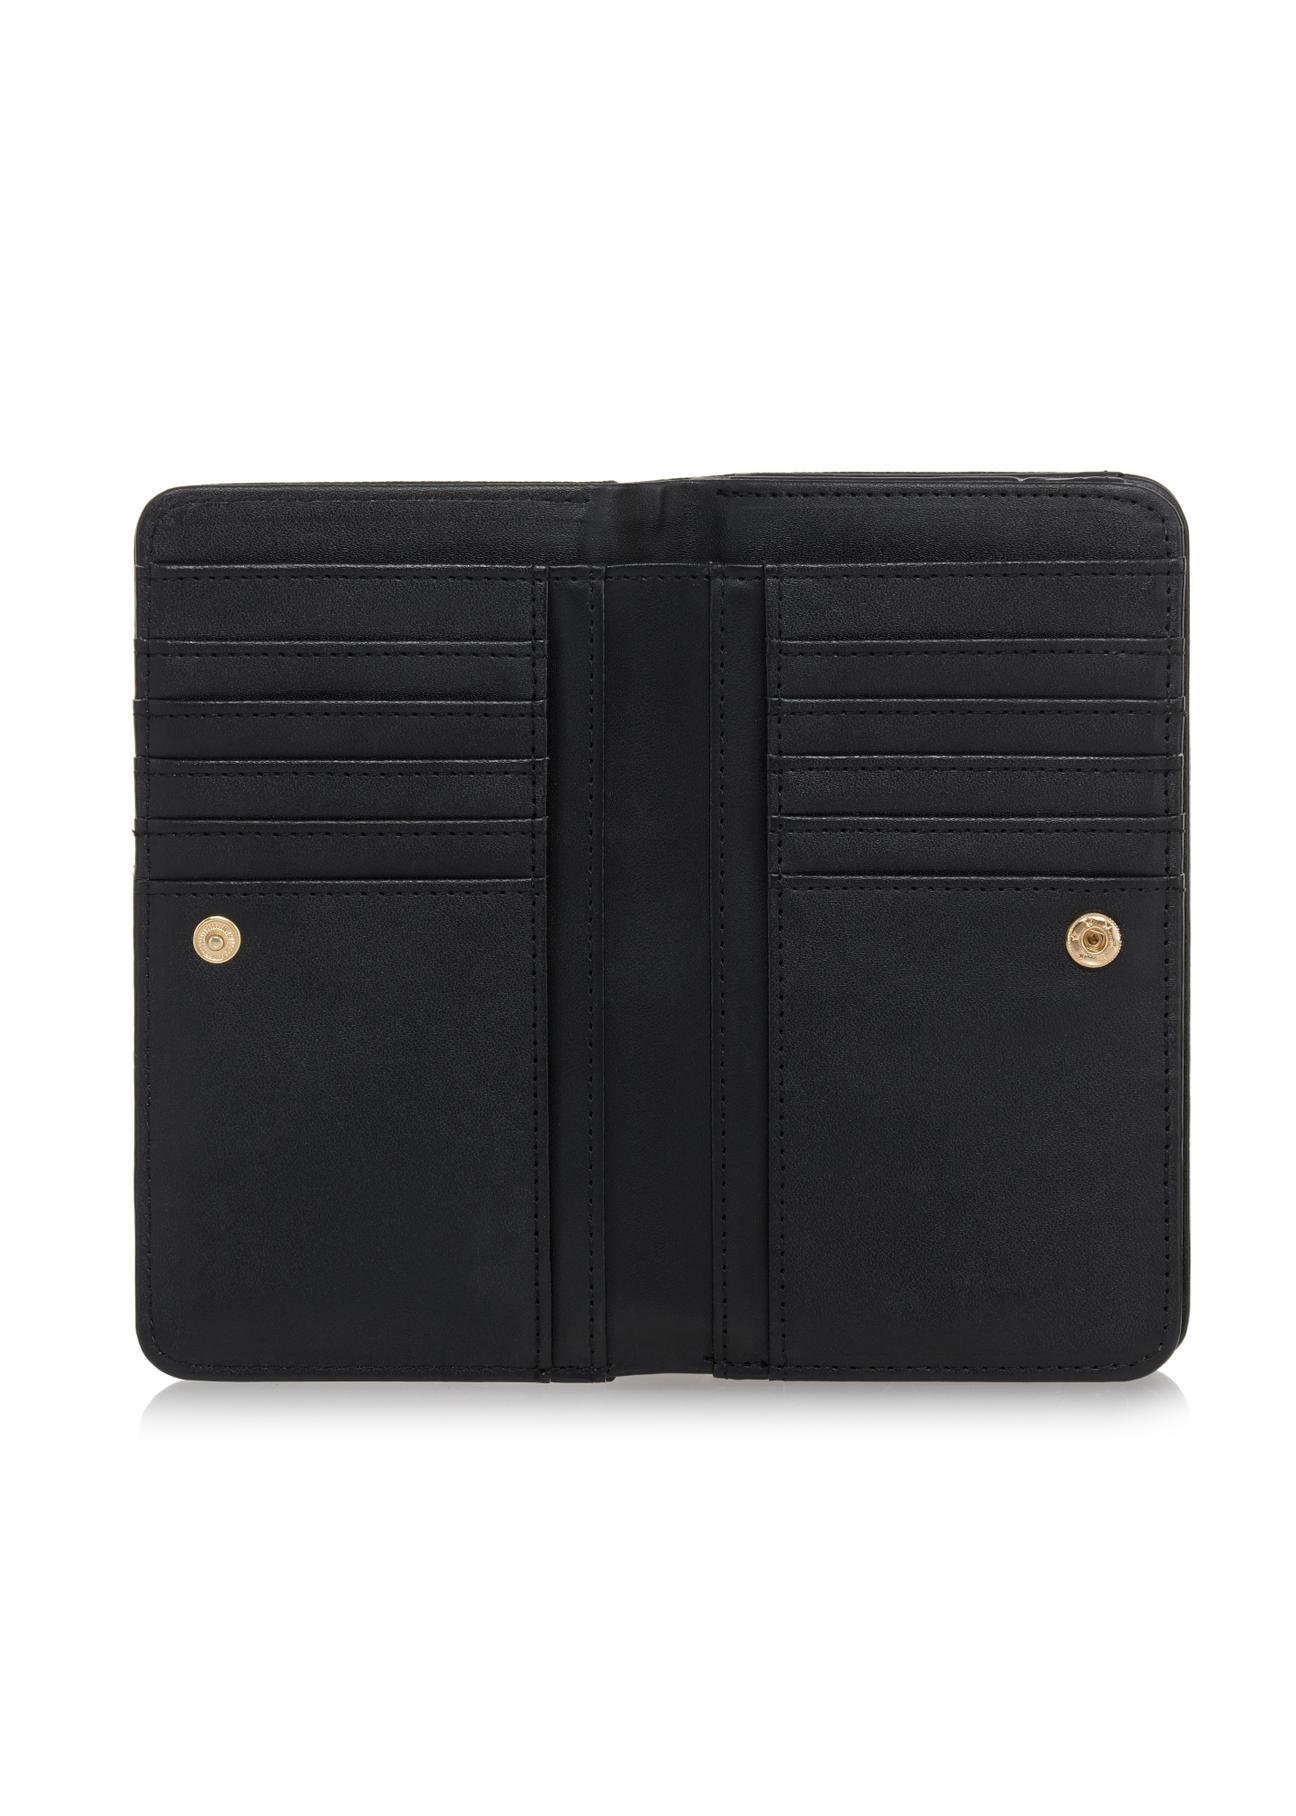 Czarny portfel damski z dżetami POREC-0355-99(Z23)